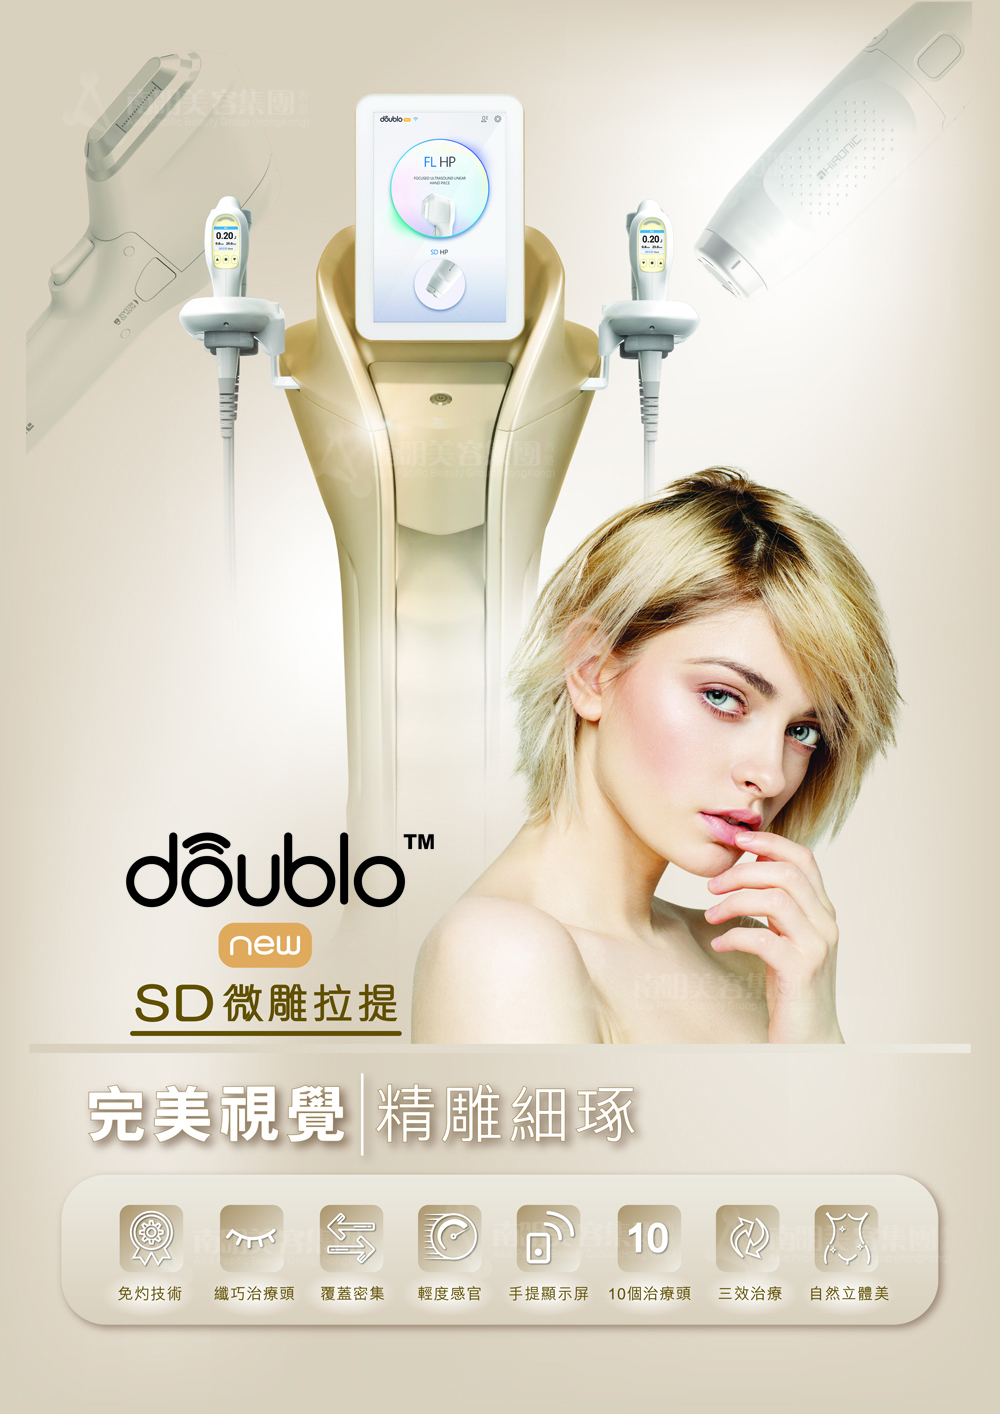 New Doublo SD微雕拉提 SD聚點拉提技術 MFU 4RF 完美視覺 精雕細琢